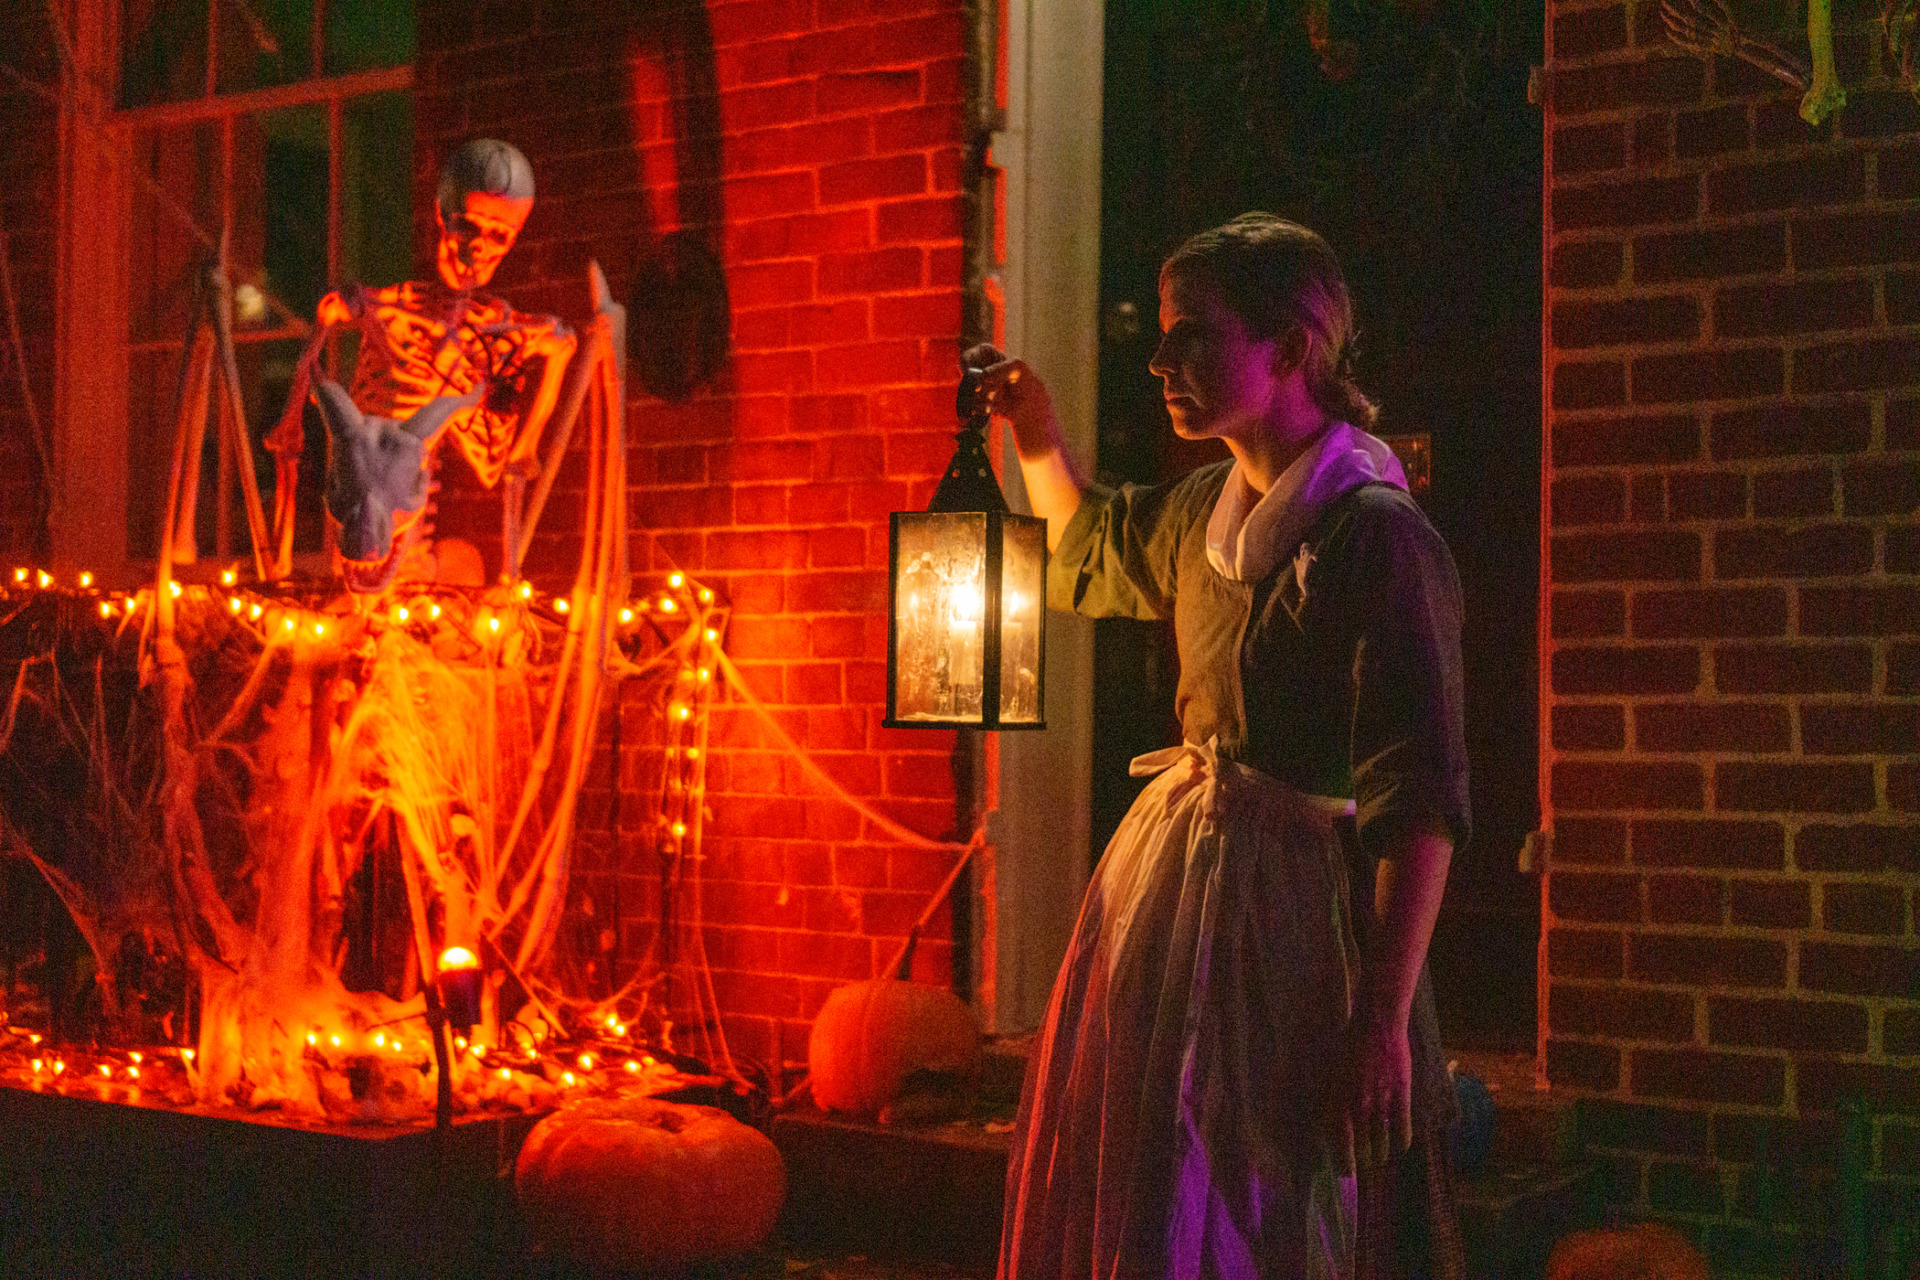 Eugene Halloween parties, costumes, treats, haunted houses